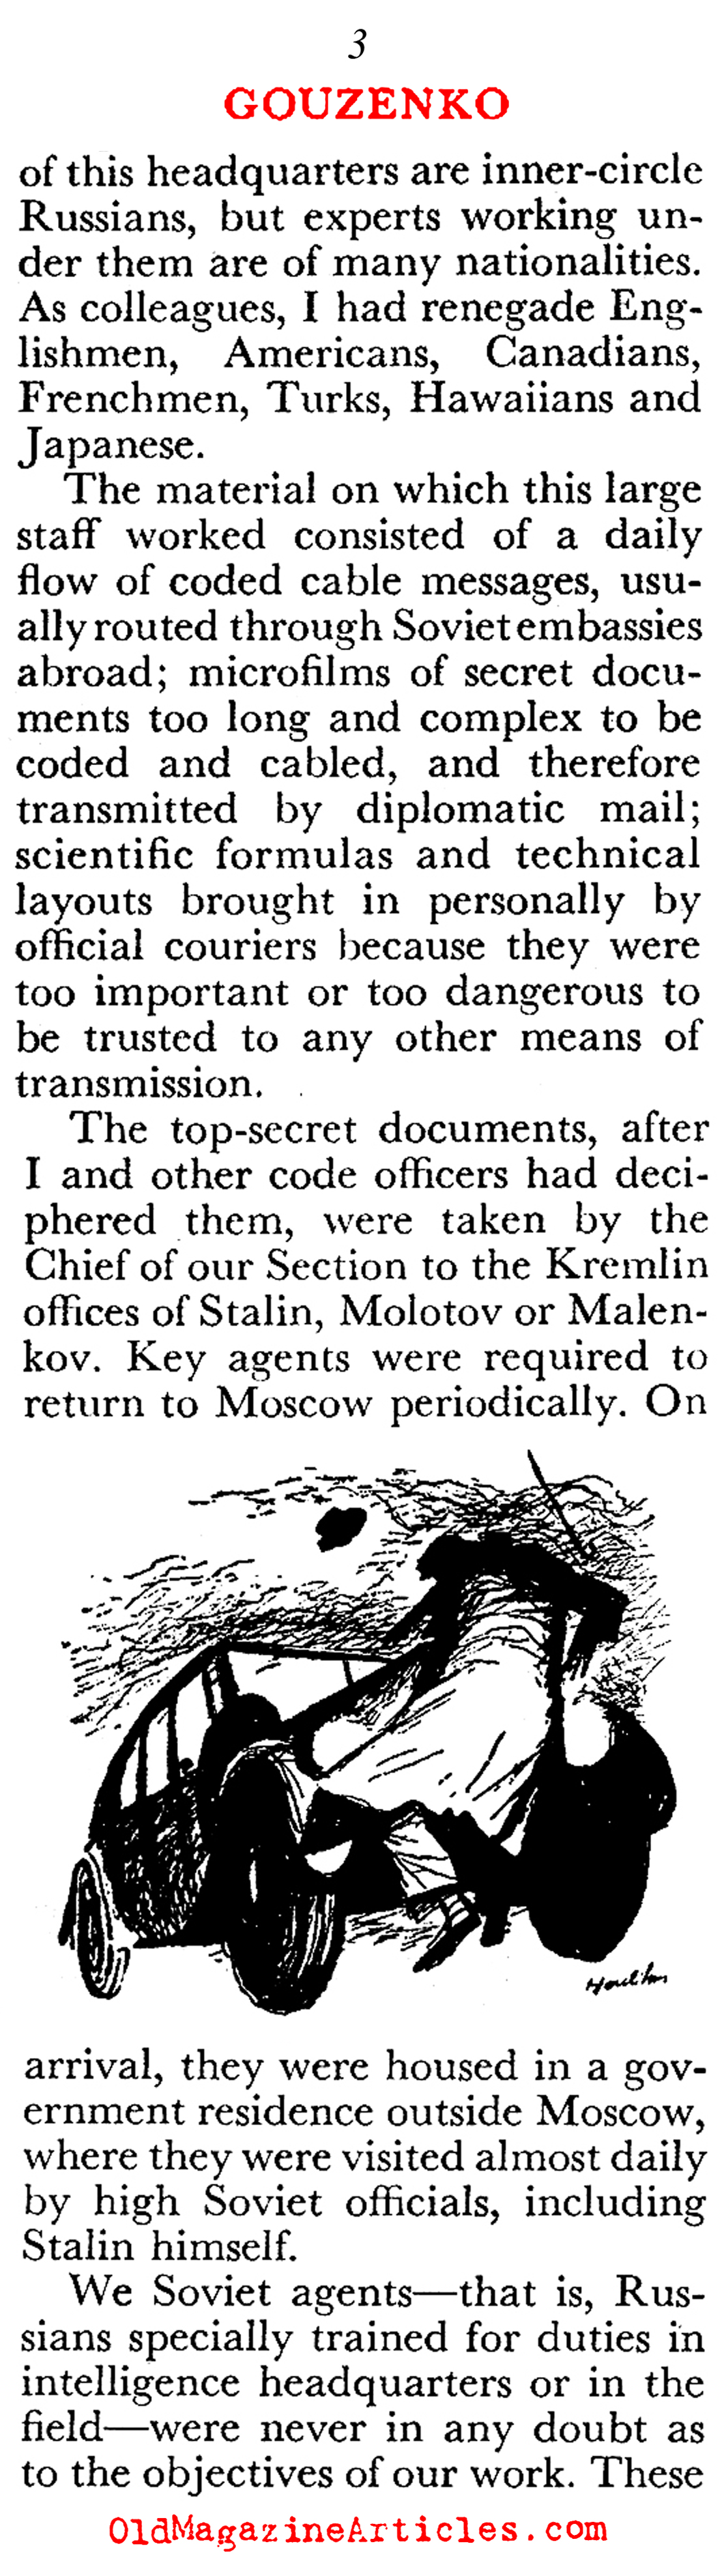 The Cold War Began with Igor Gouzenko (Coronet Magazine, 1953)